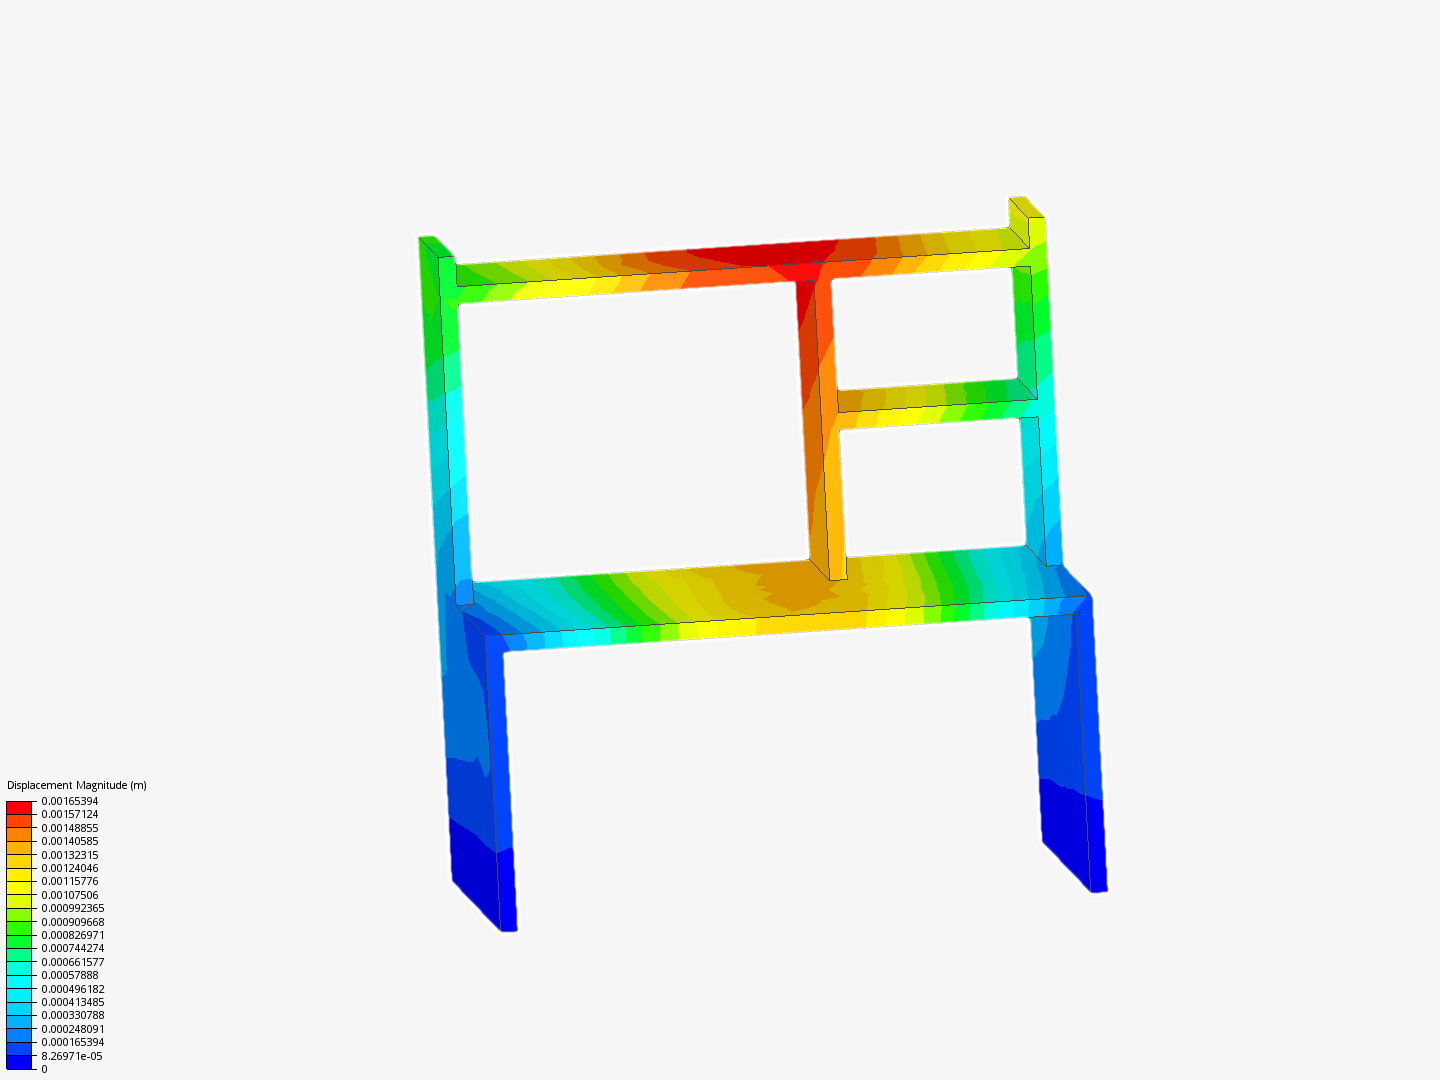 Table - FEM structure test image